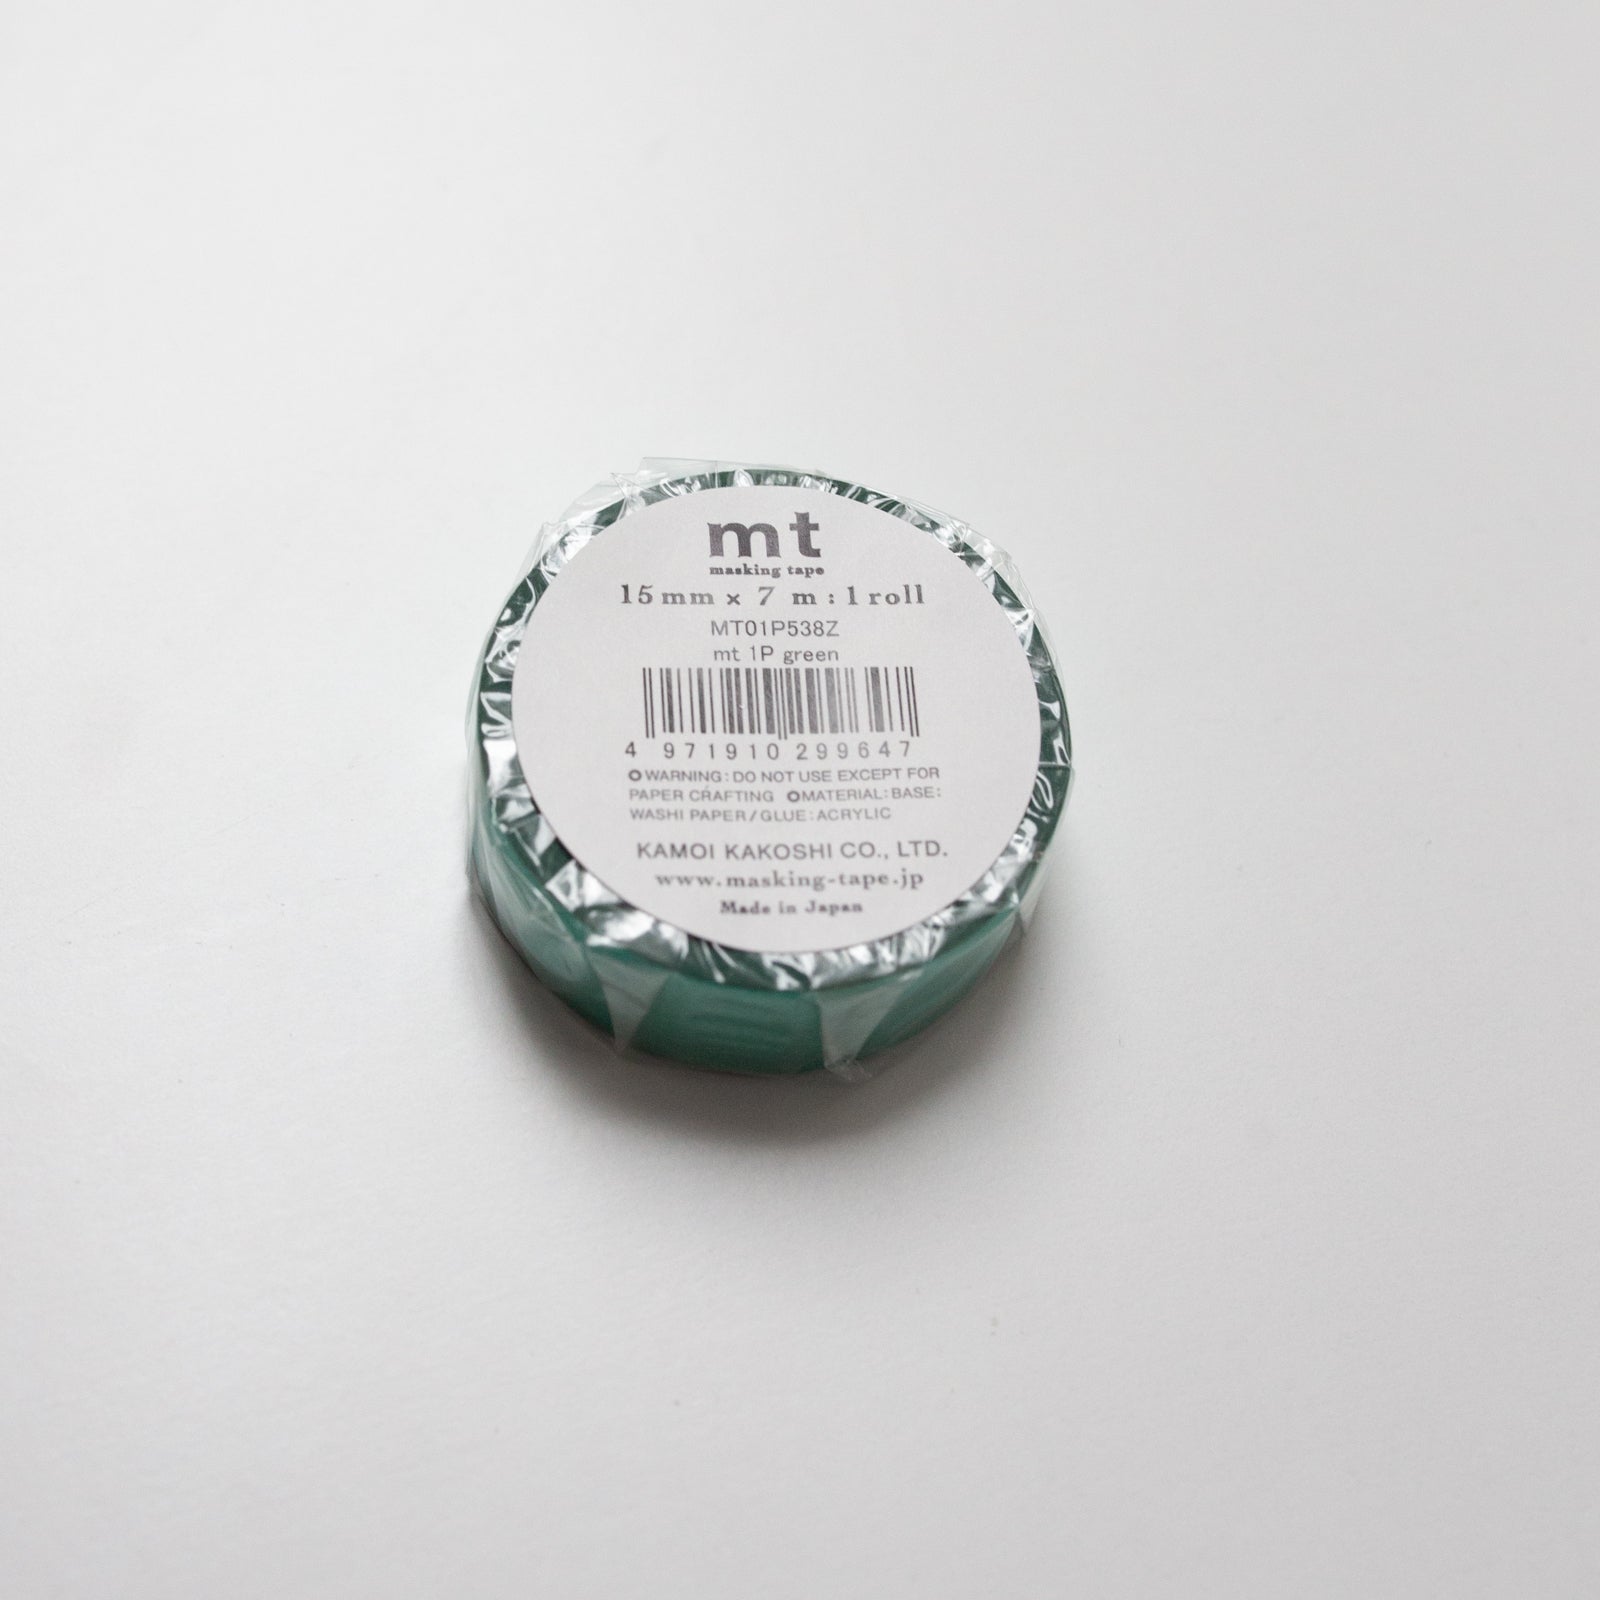 MT Masking tape Green